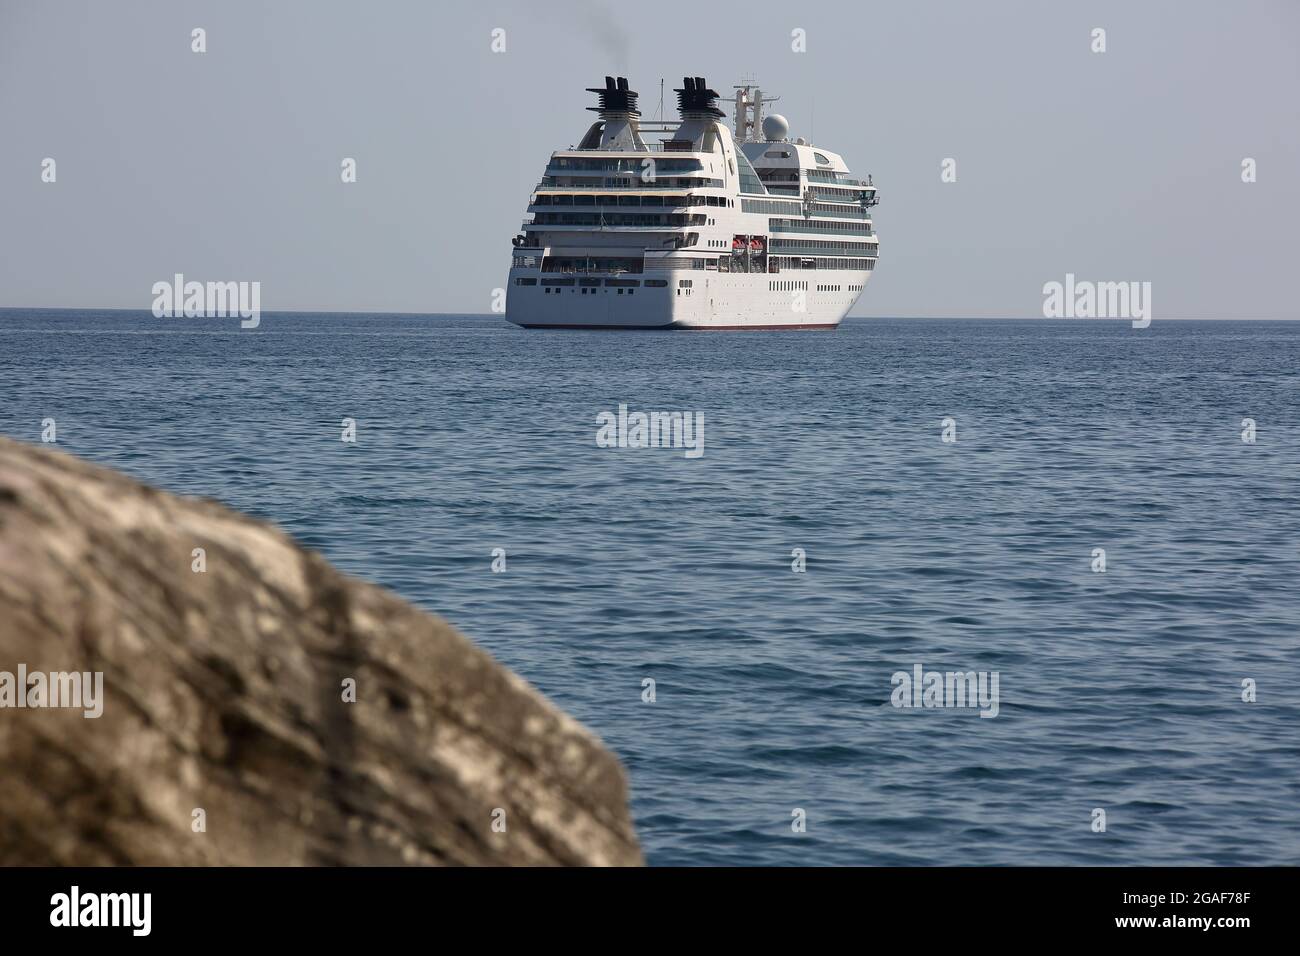 Luxury huge cruise ship on the sea, viewed through coastal white rocks Stock Photo